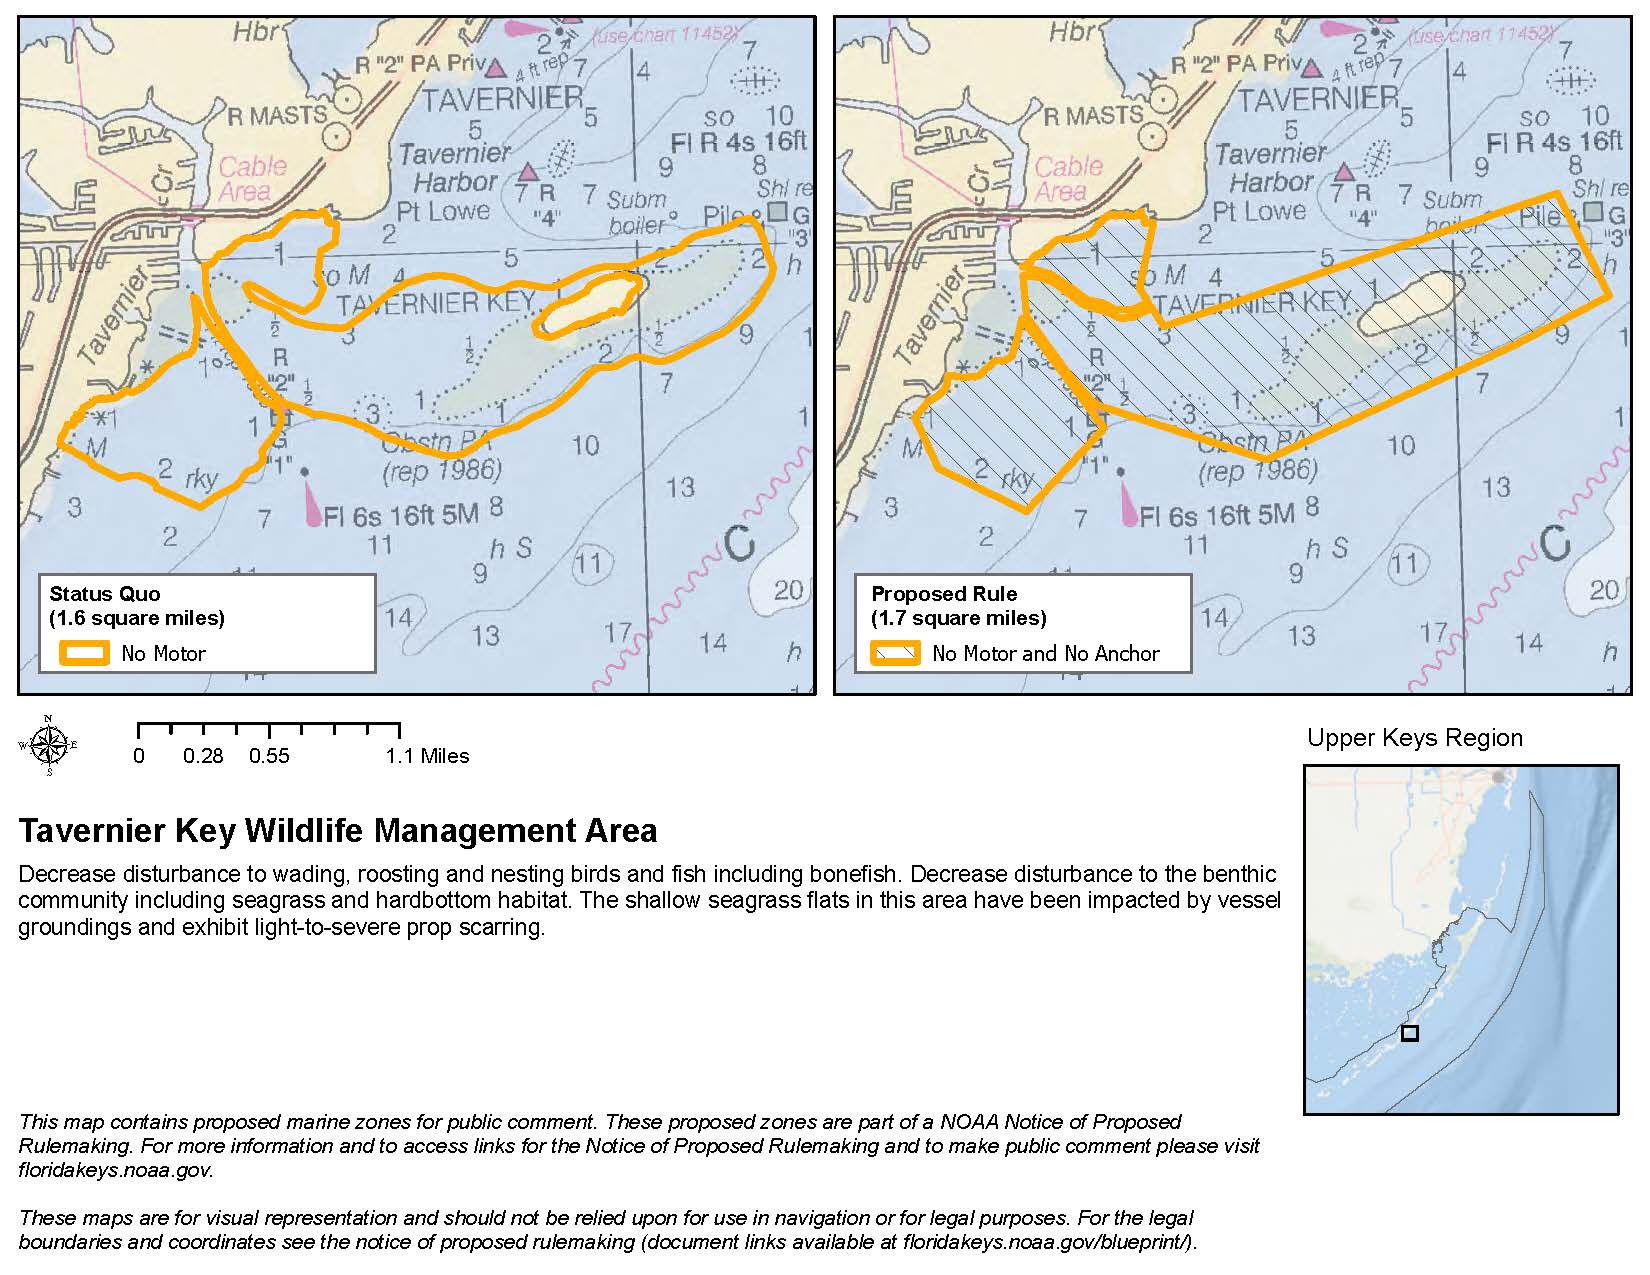 Florida Keys fishing maps? - The Hull Truth - Boating and Fishing Forum